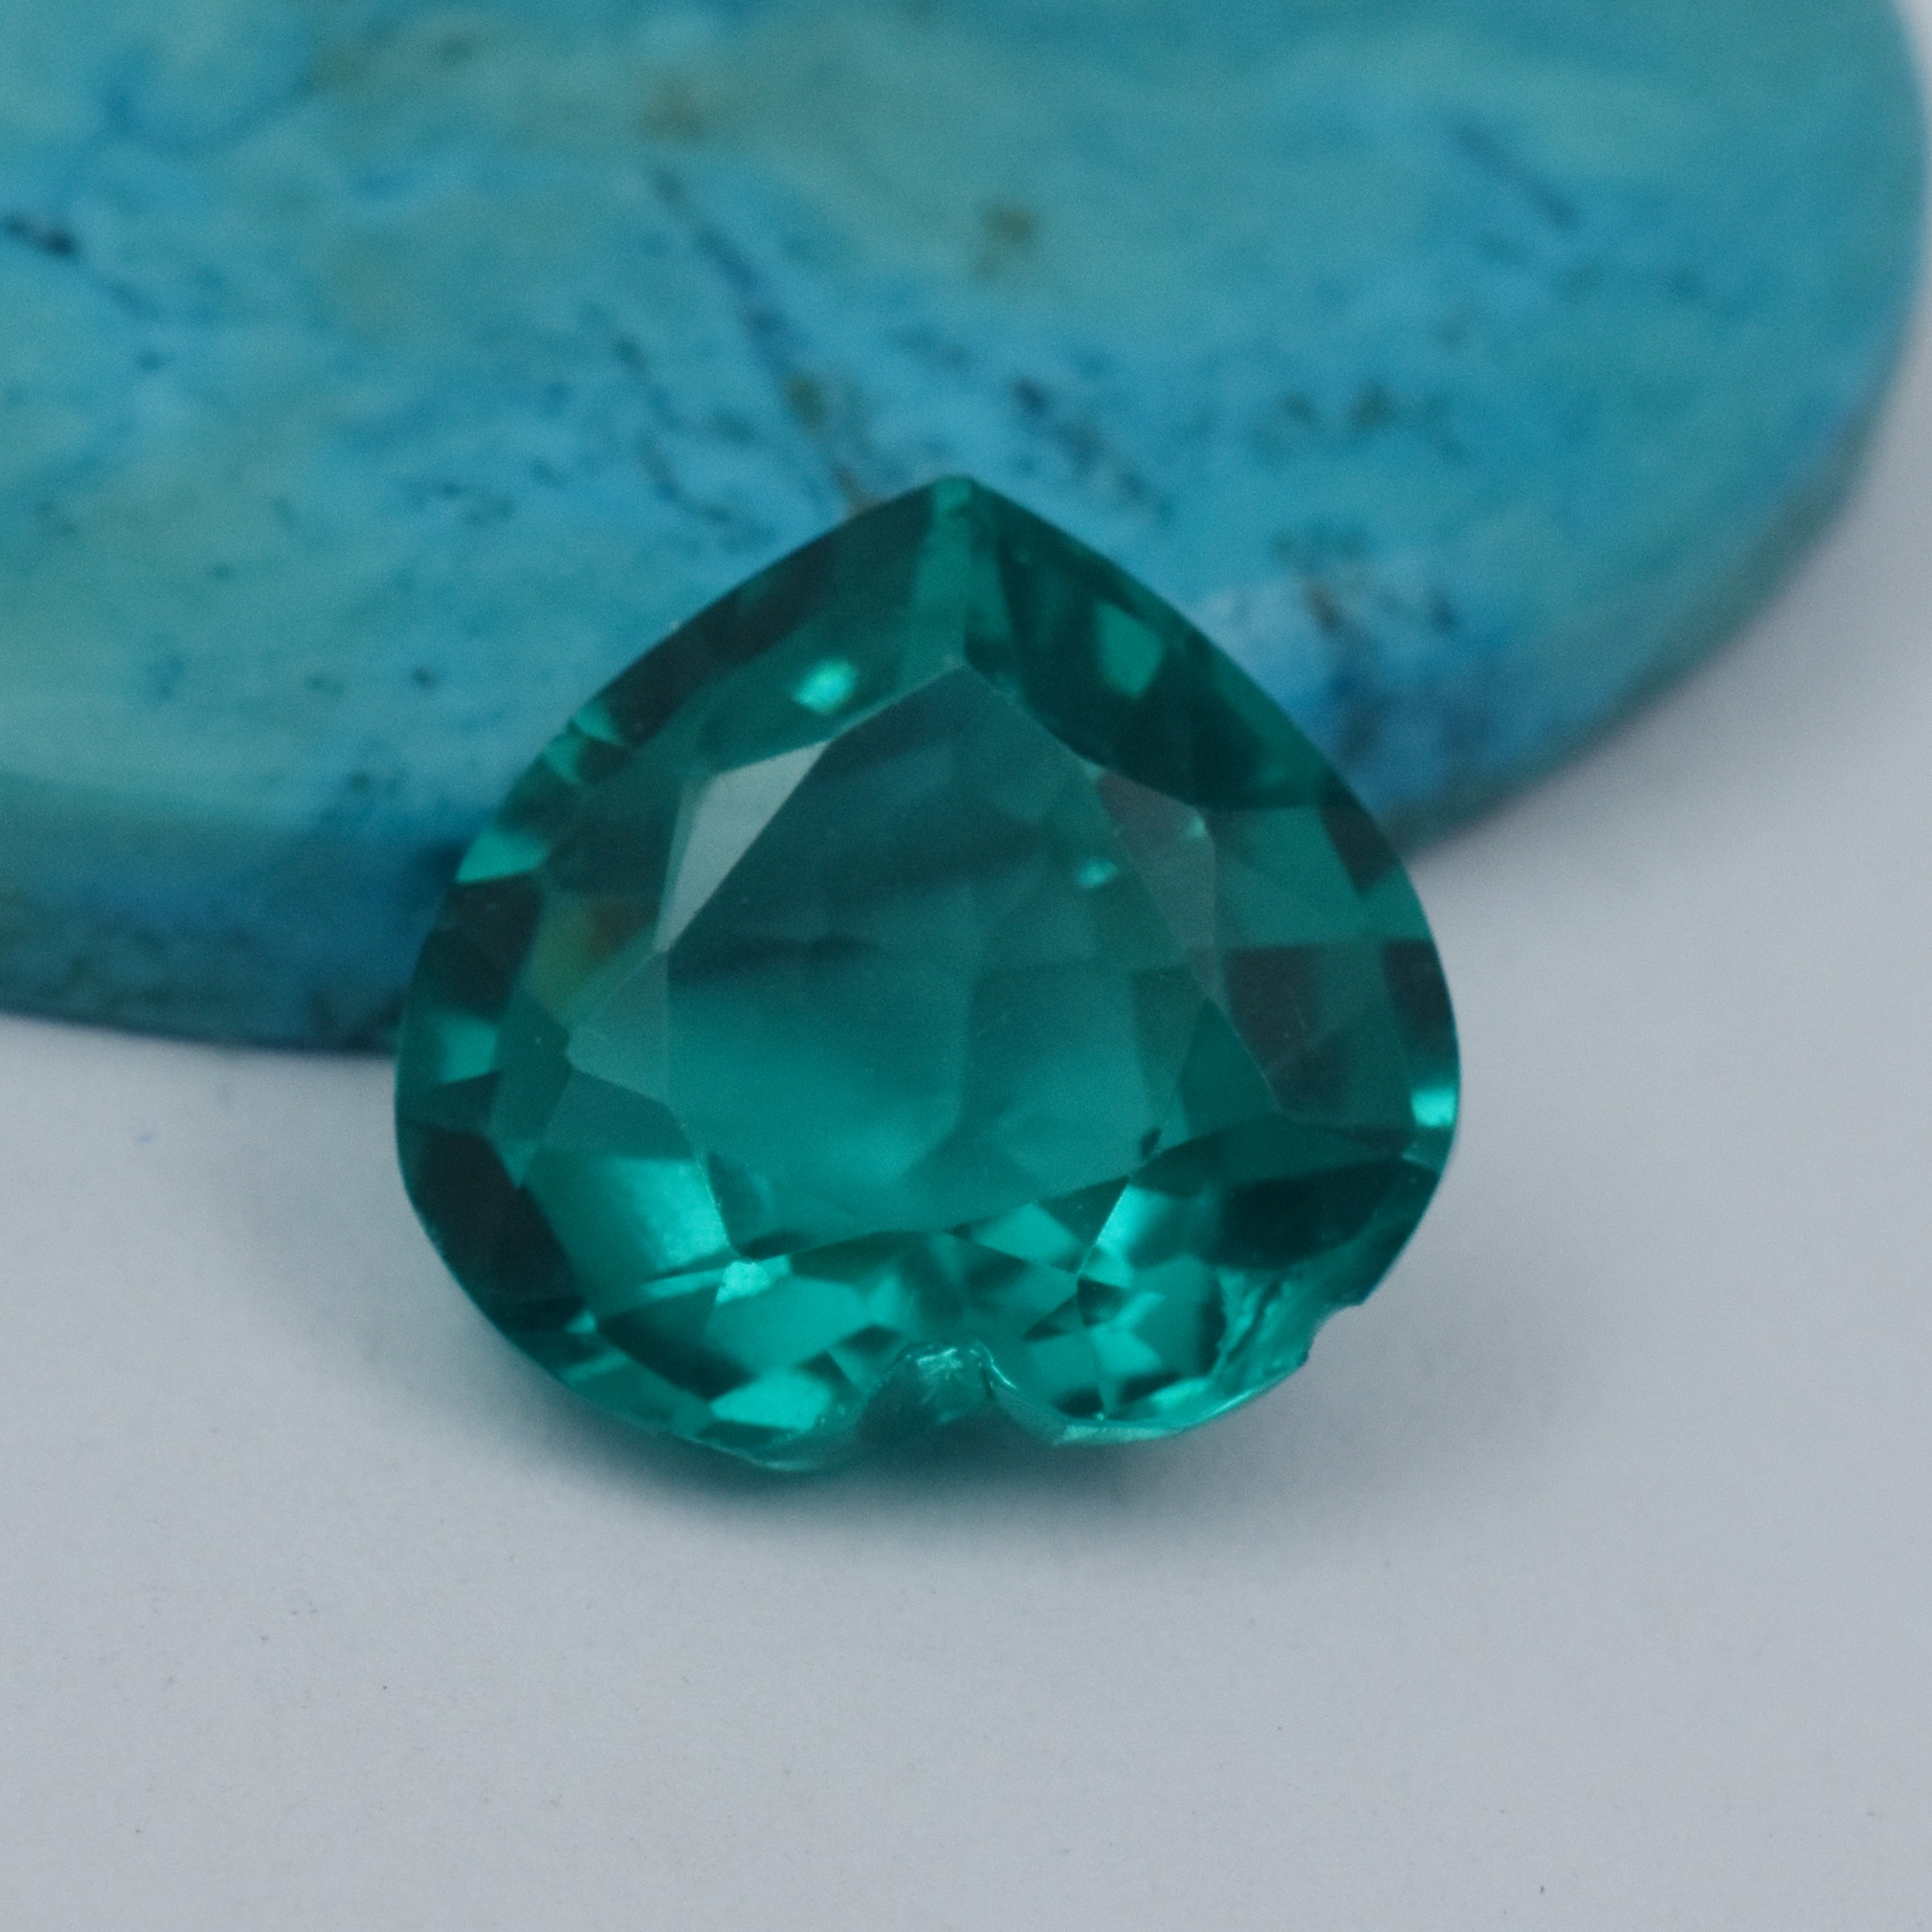 Stunning Tourmaline Gemstone 10.45 Carat Green Tourmaline Certified Natural Loose Gemstone | Best For Gift | GIFT For Her / Him